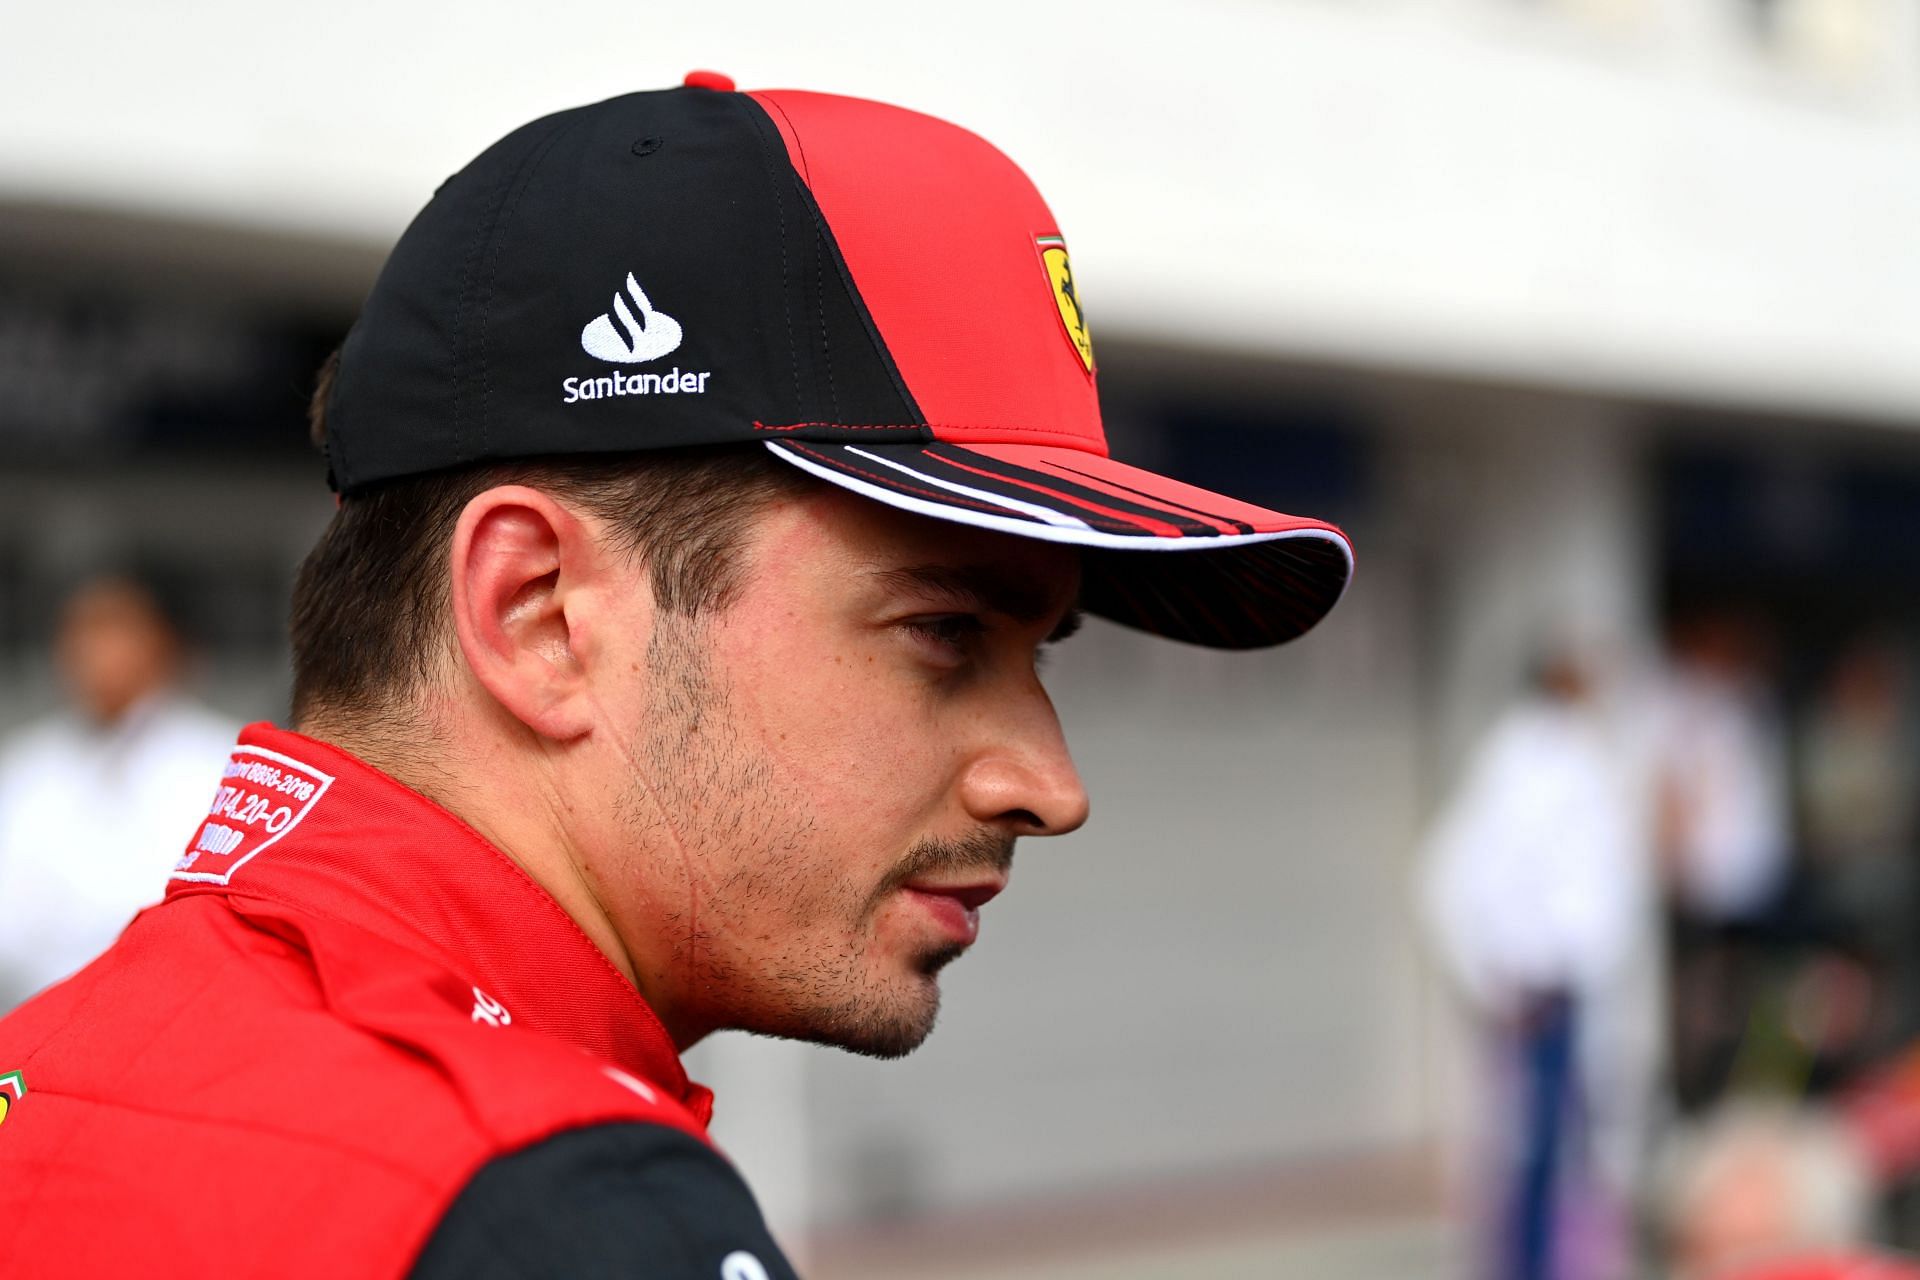 Charles Leclerc needs to be patient at Ferrari according to Felipe Massa